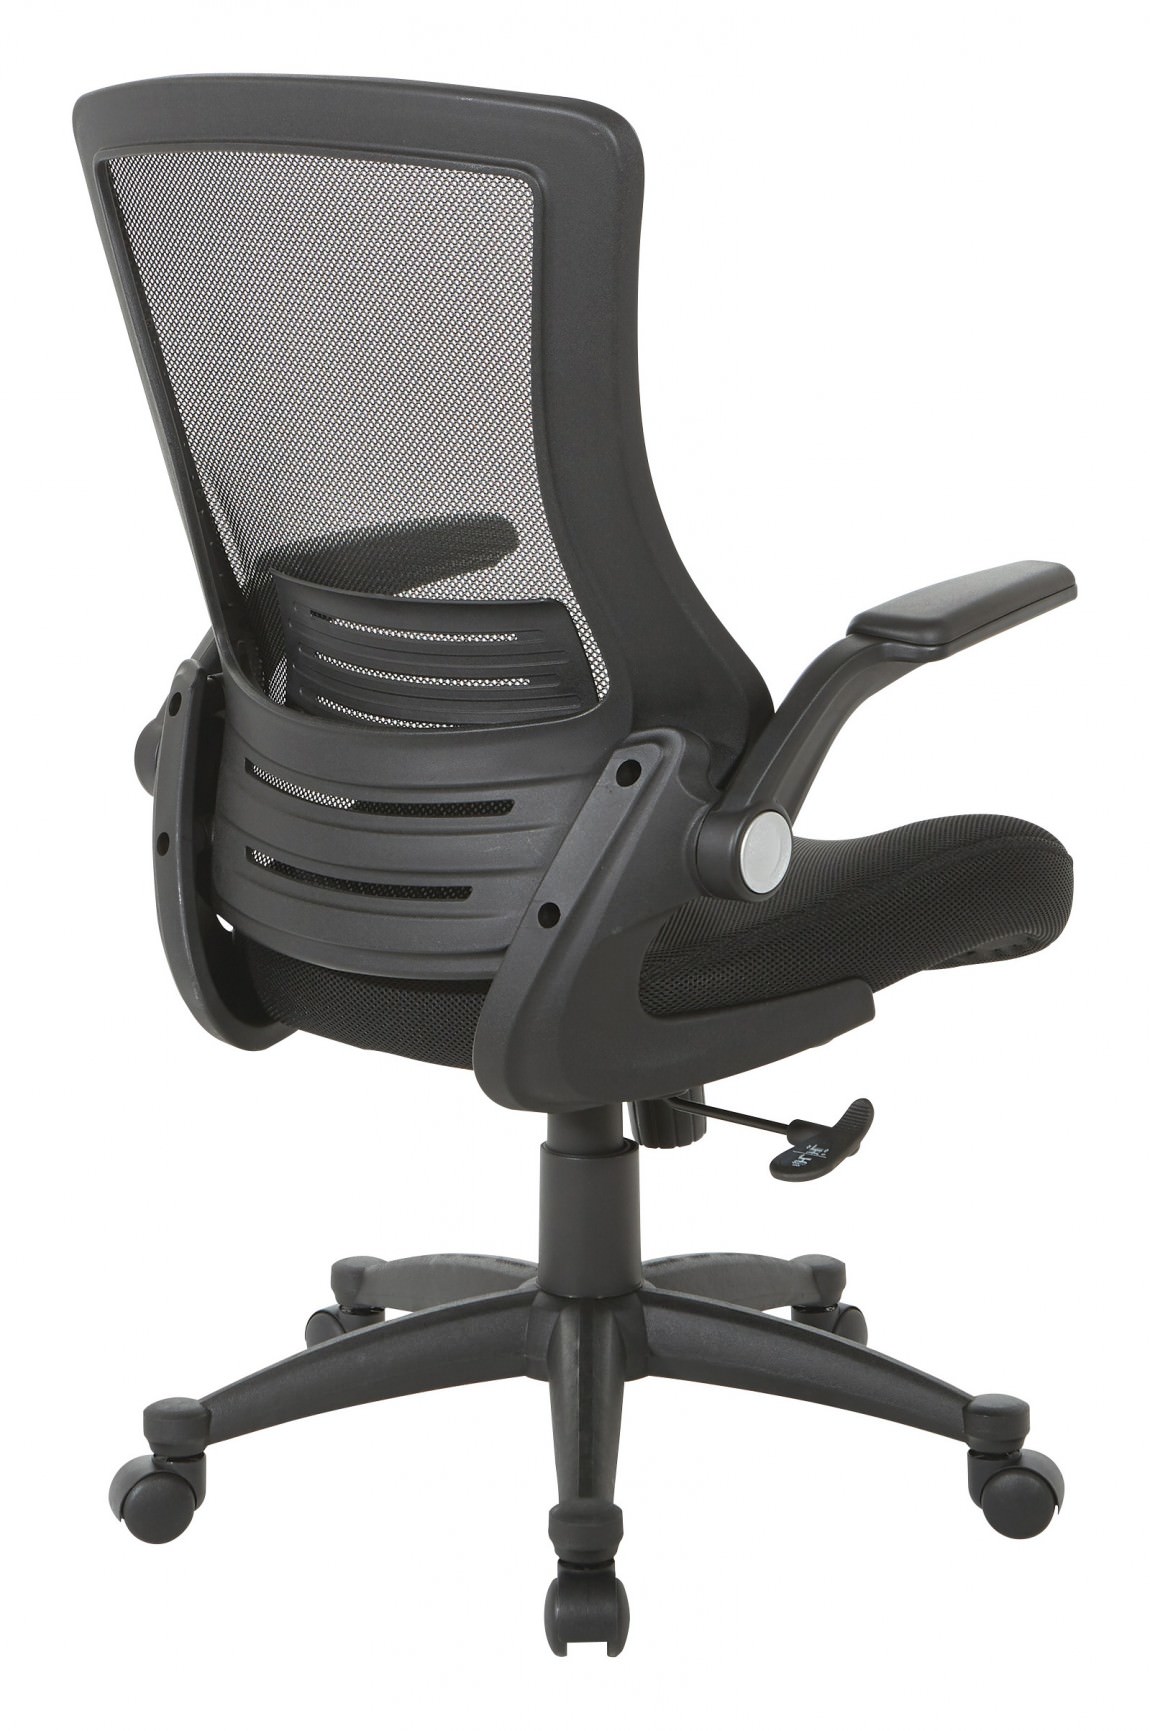 https://madisonliquidators.com/images/p/1150/26904-mesh-back-office-chair-4.jpg